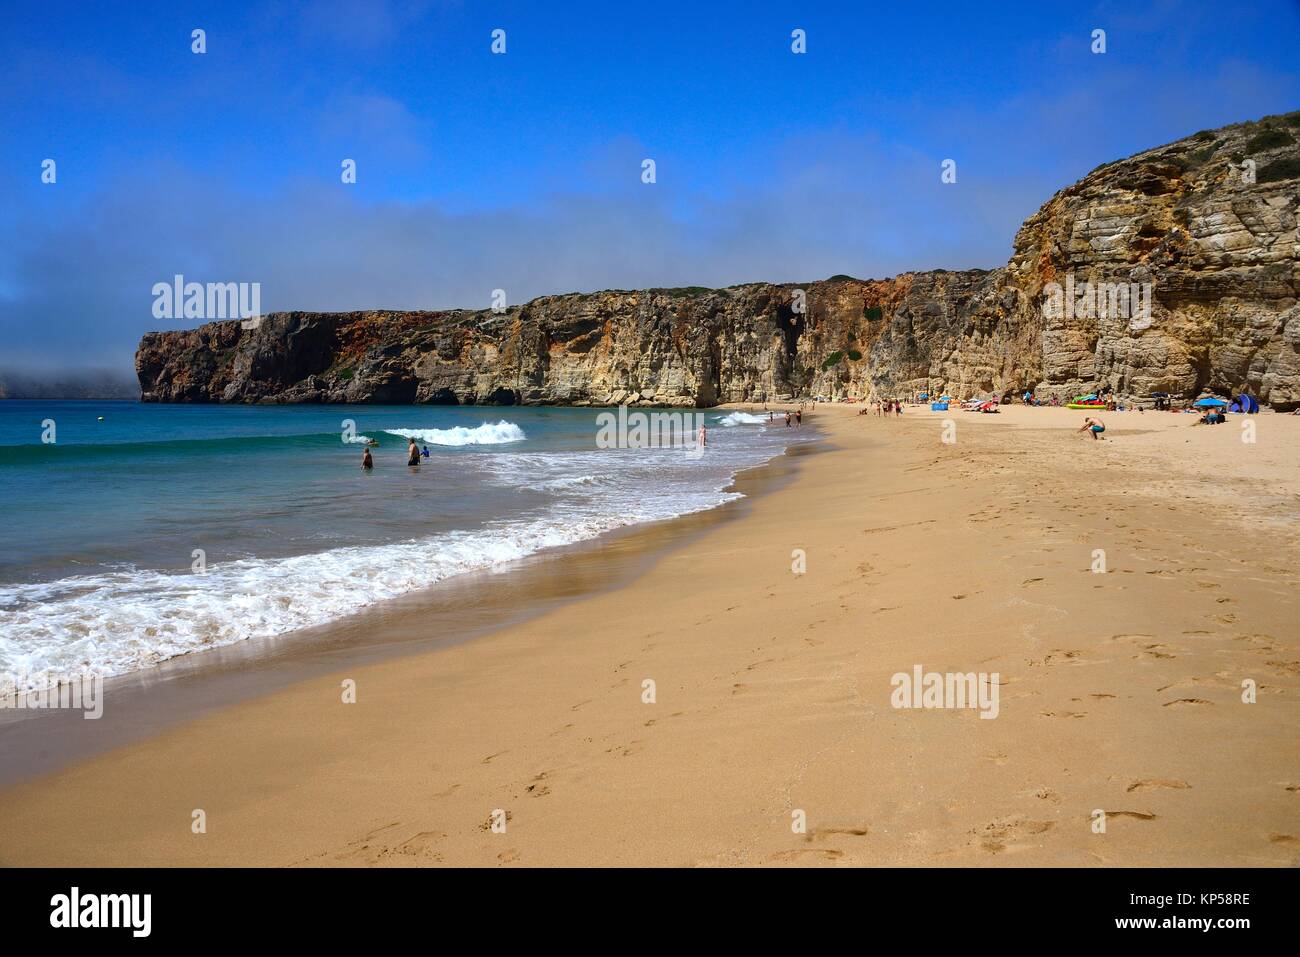 Atlantic Ocean shore, Beliche beach, Praia do Beliche near Sagres, Costa Vicentina - Vicentine Coast, Sagres, Vila do Bispo, Algarve, Portugal Stock Photo